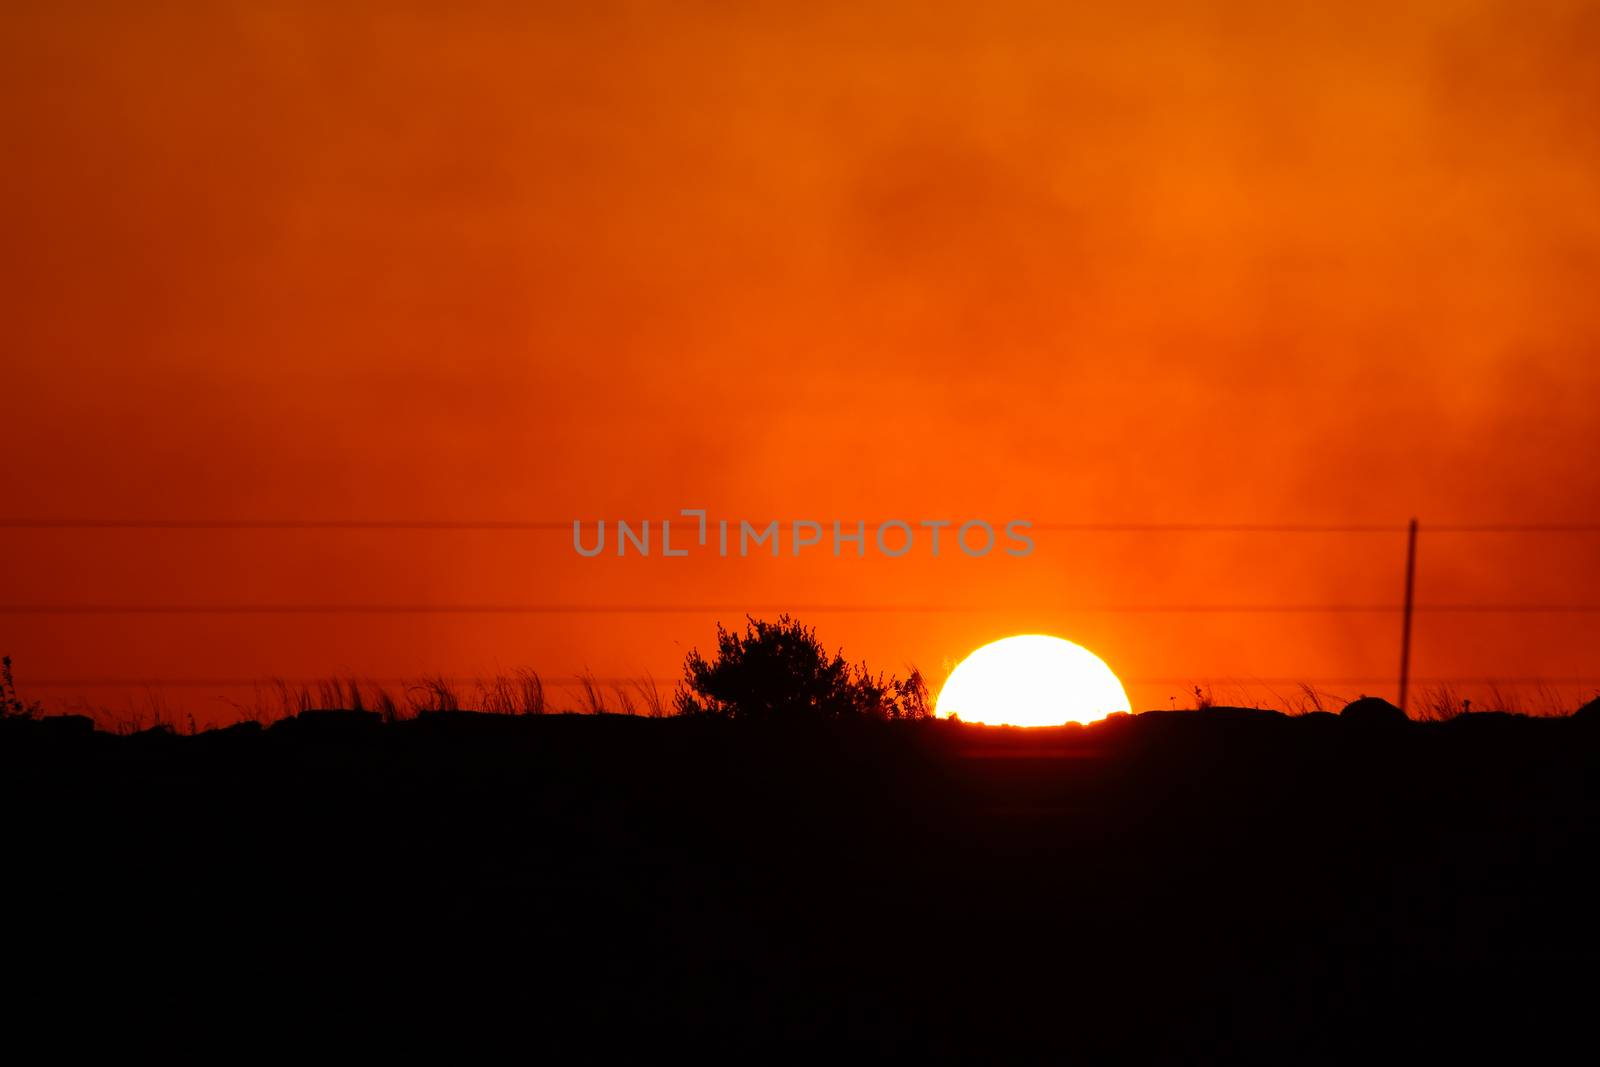 Orange Sky Sunset Over Countryside Horizon by jjvanginkel